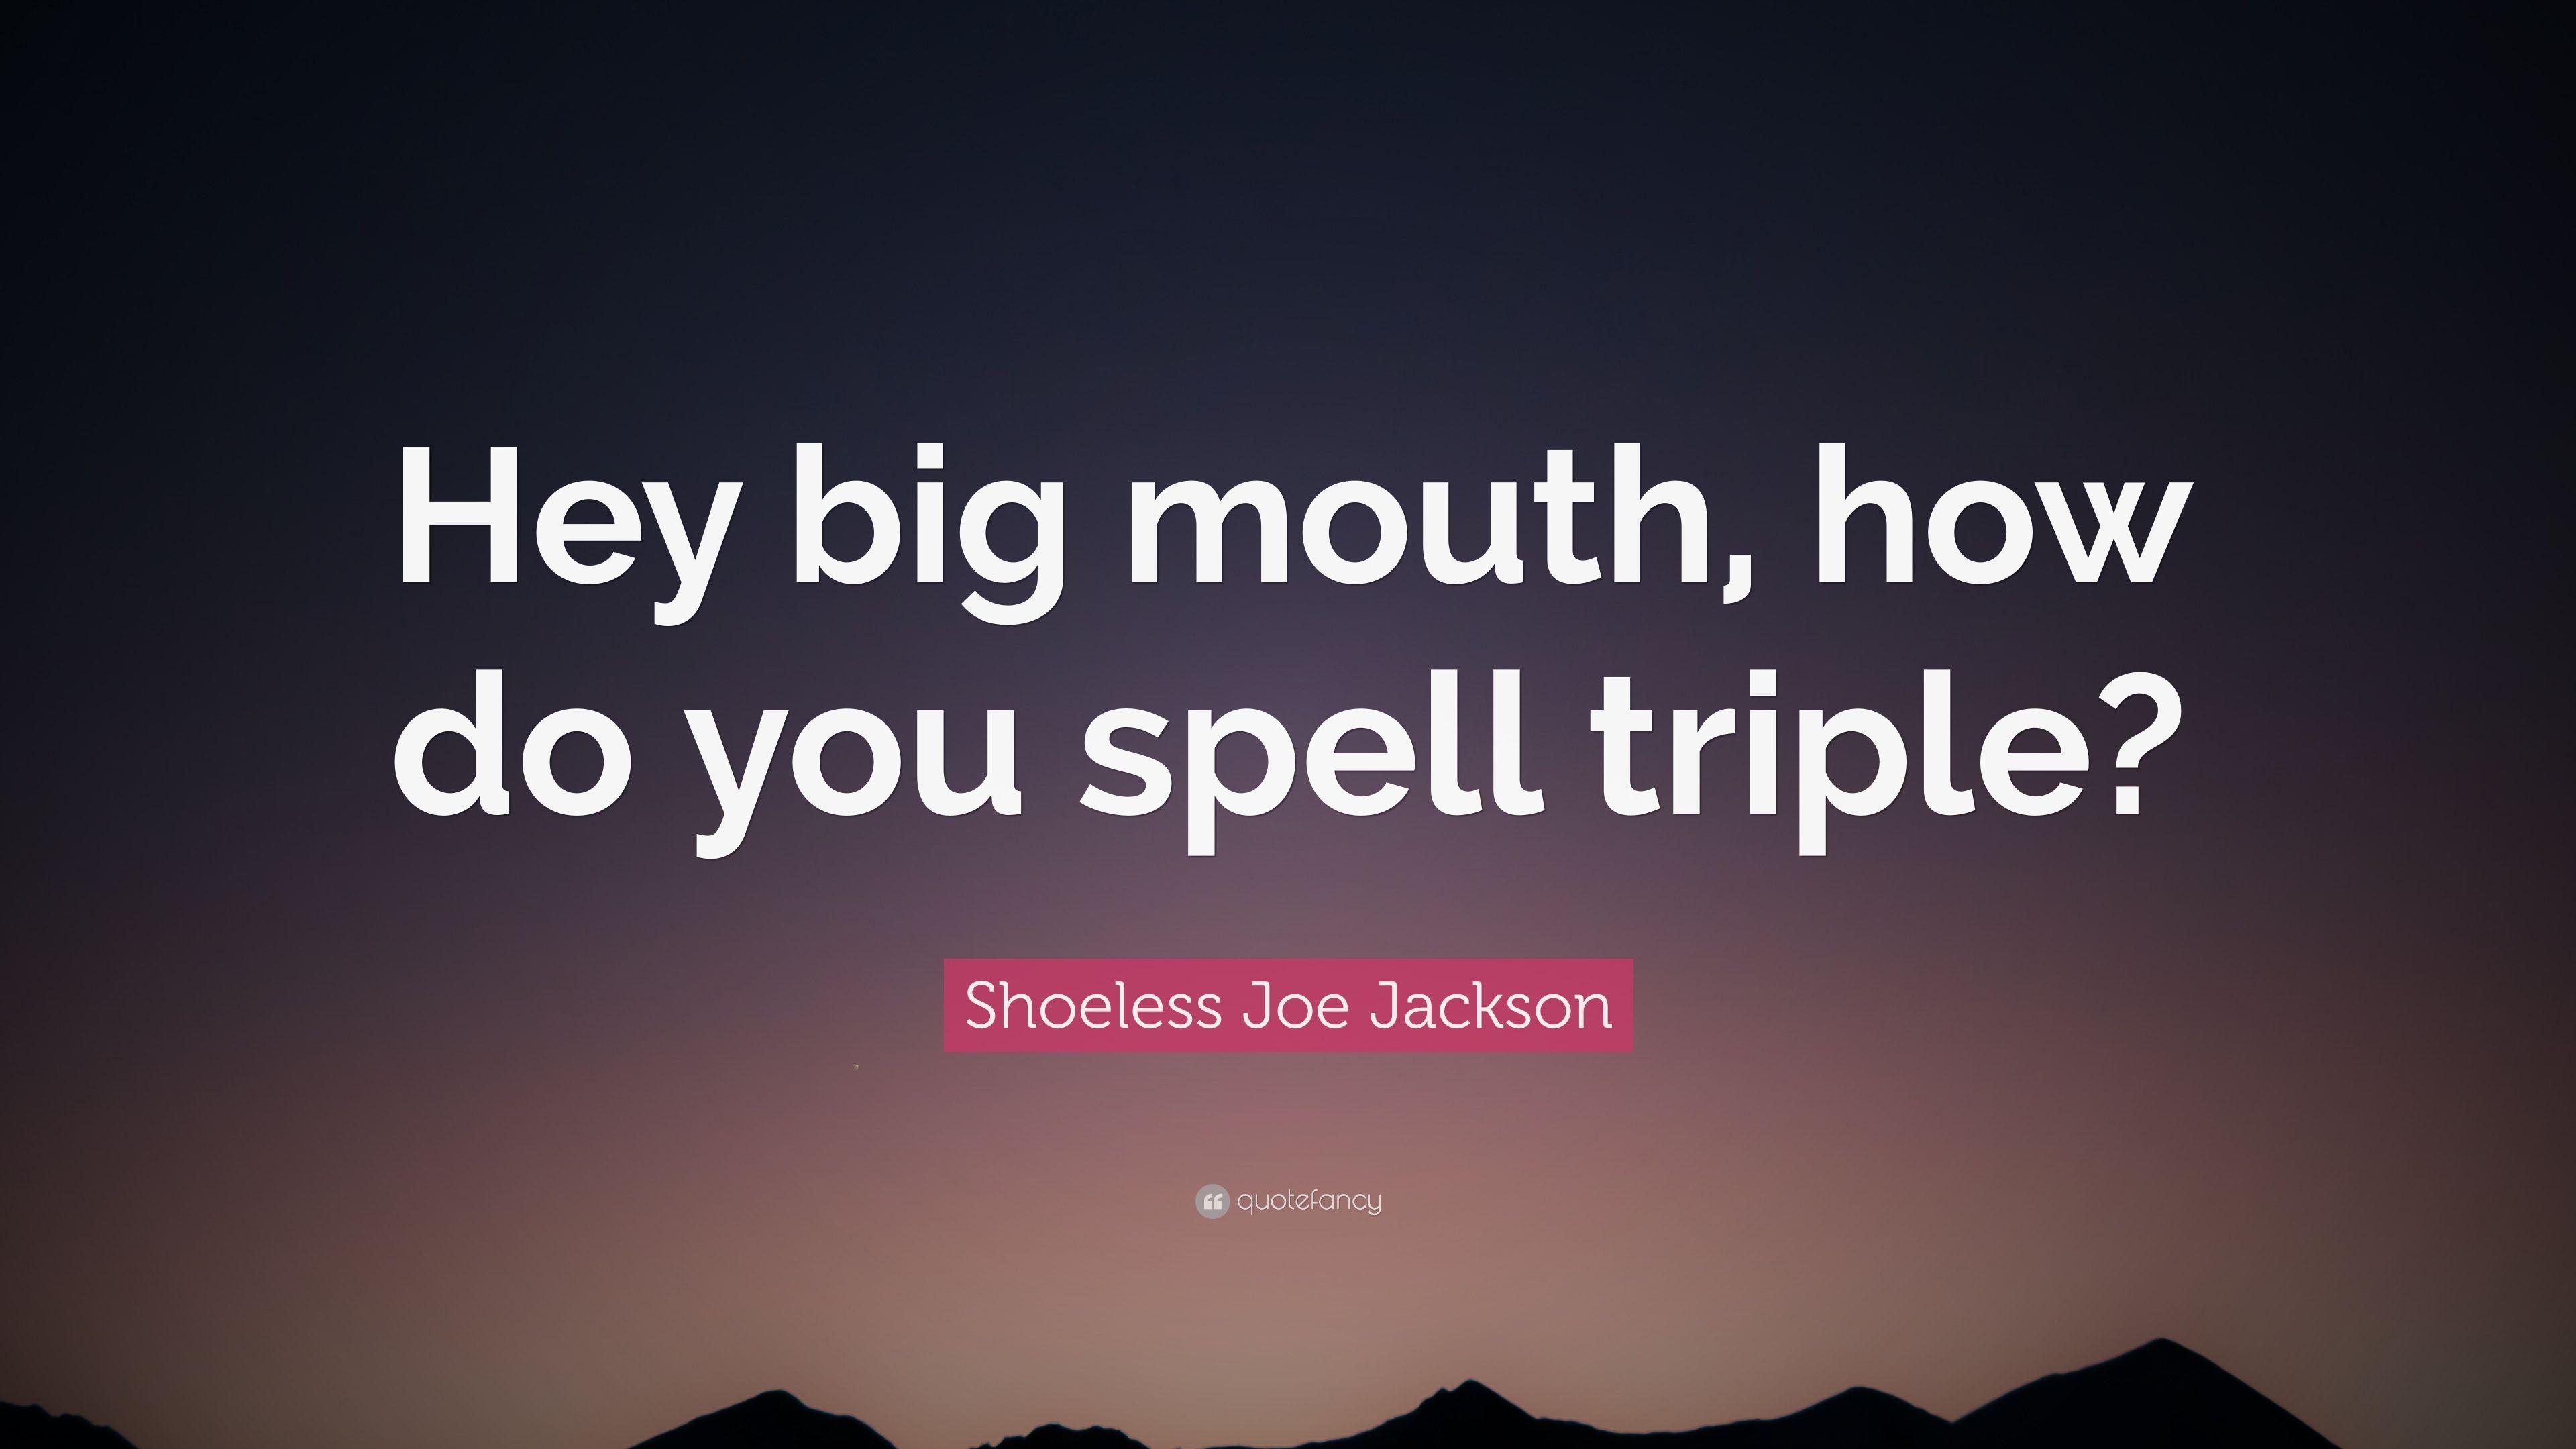 Shoeless Joe Jackson Quote: “Hey big mouth, how do you spell triple